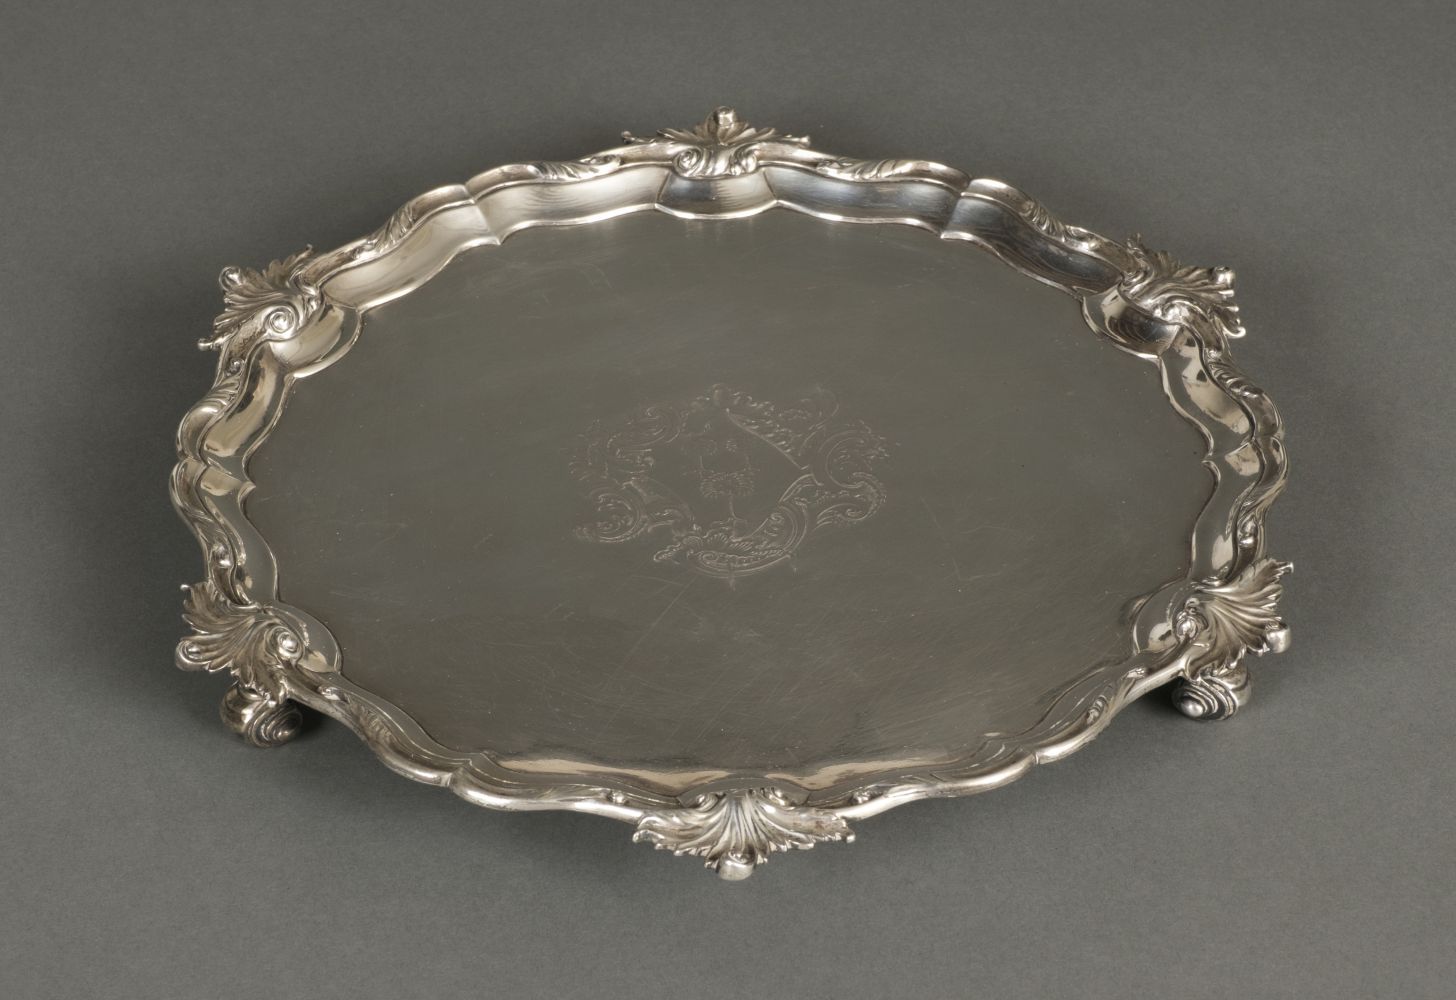 * Salver. George II silver salver by George Wickes, London 1753